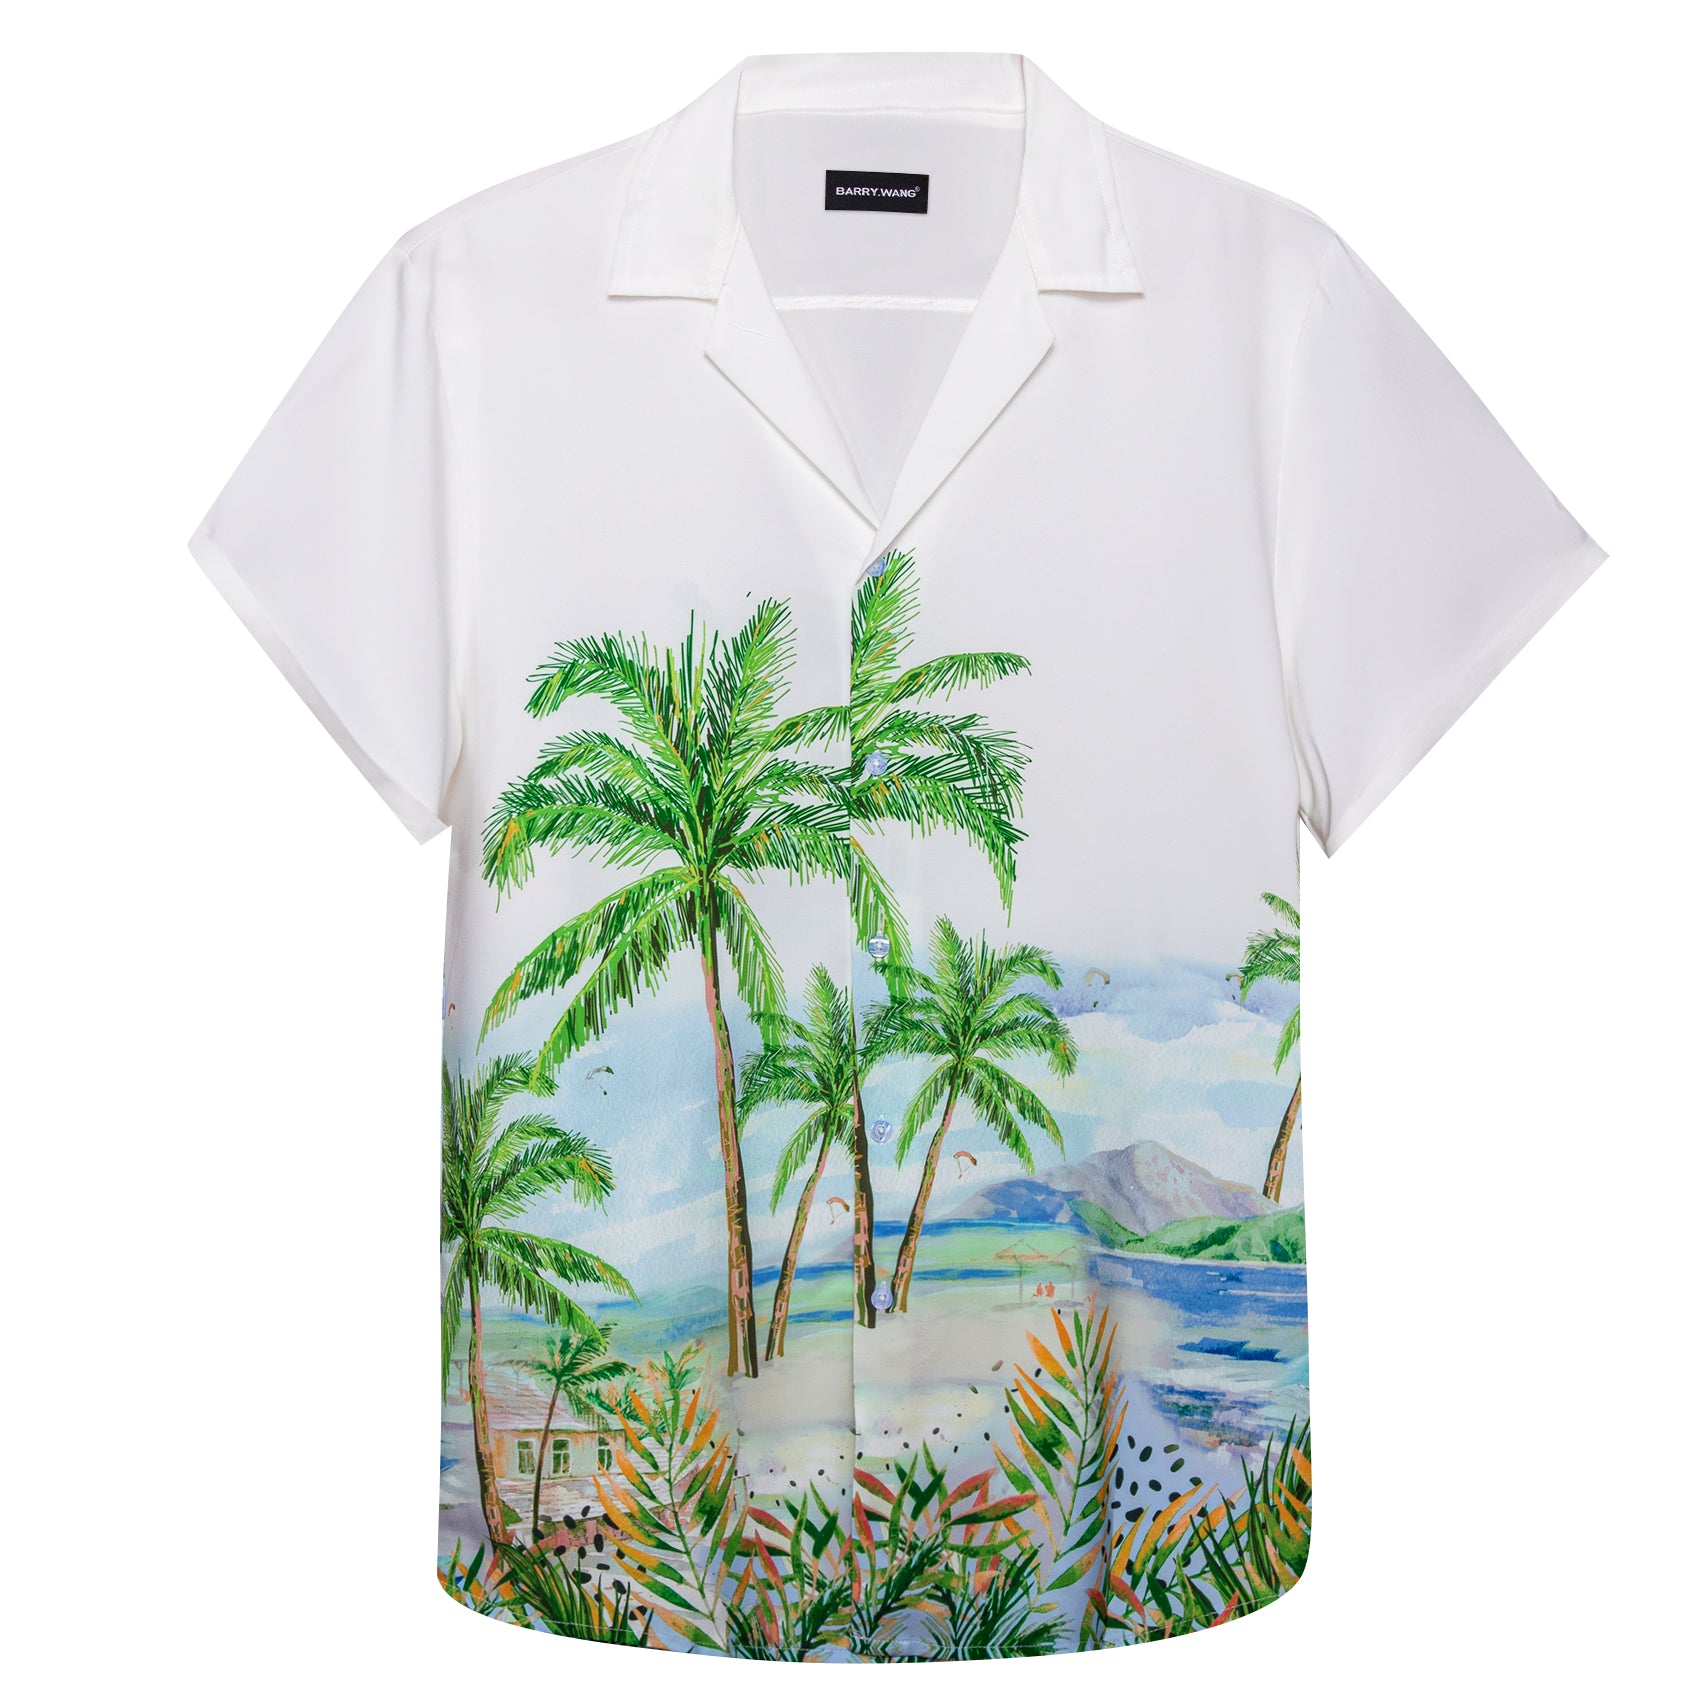 Barry Wang Hawaiian Shirts Beach Coconut Trees Mens Printed White Shirts